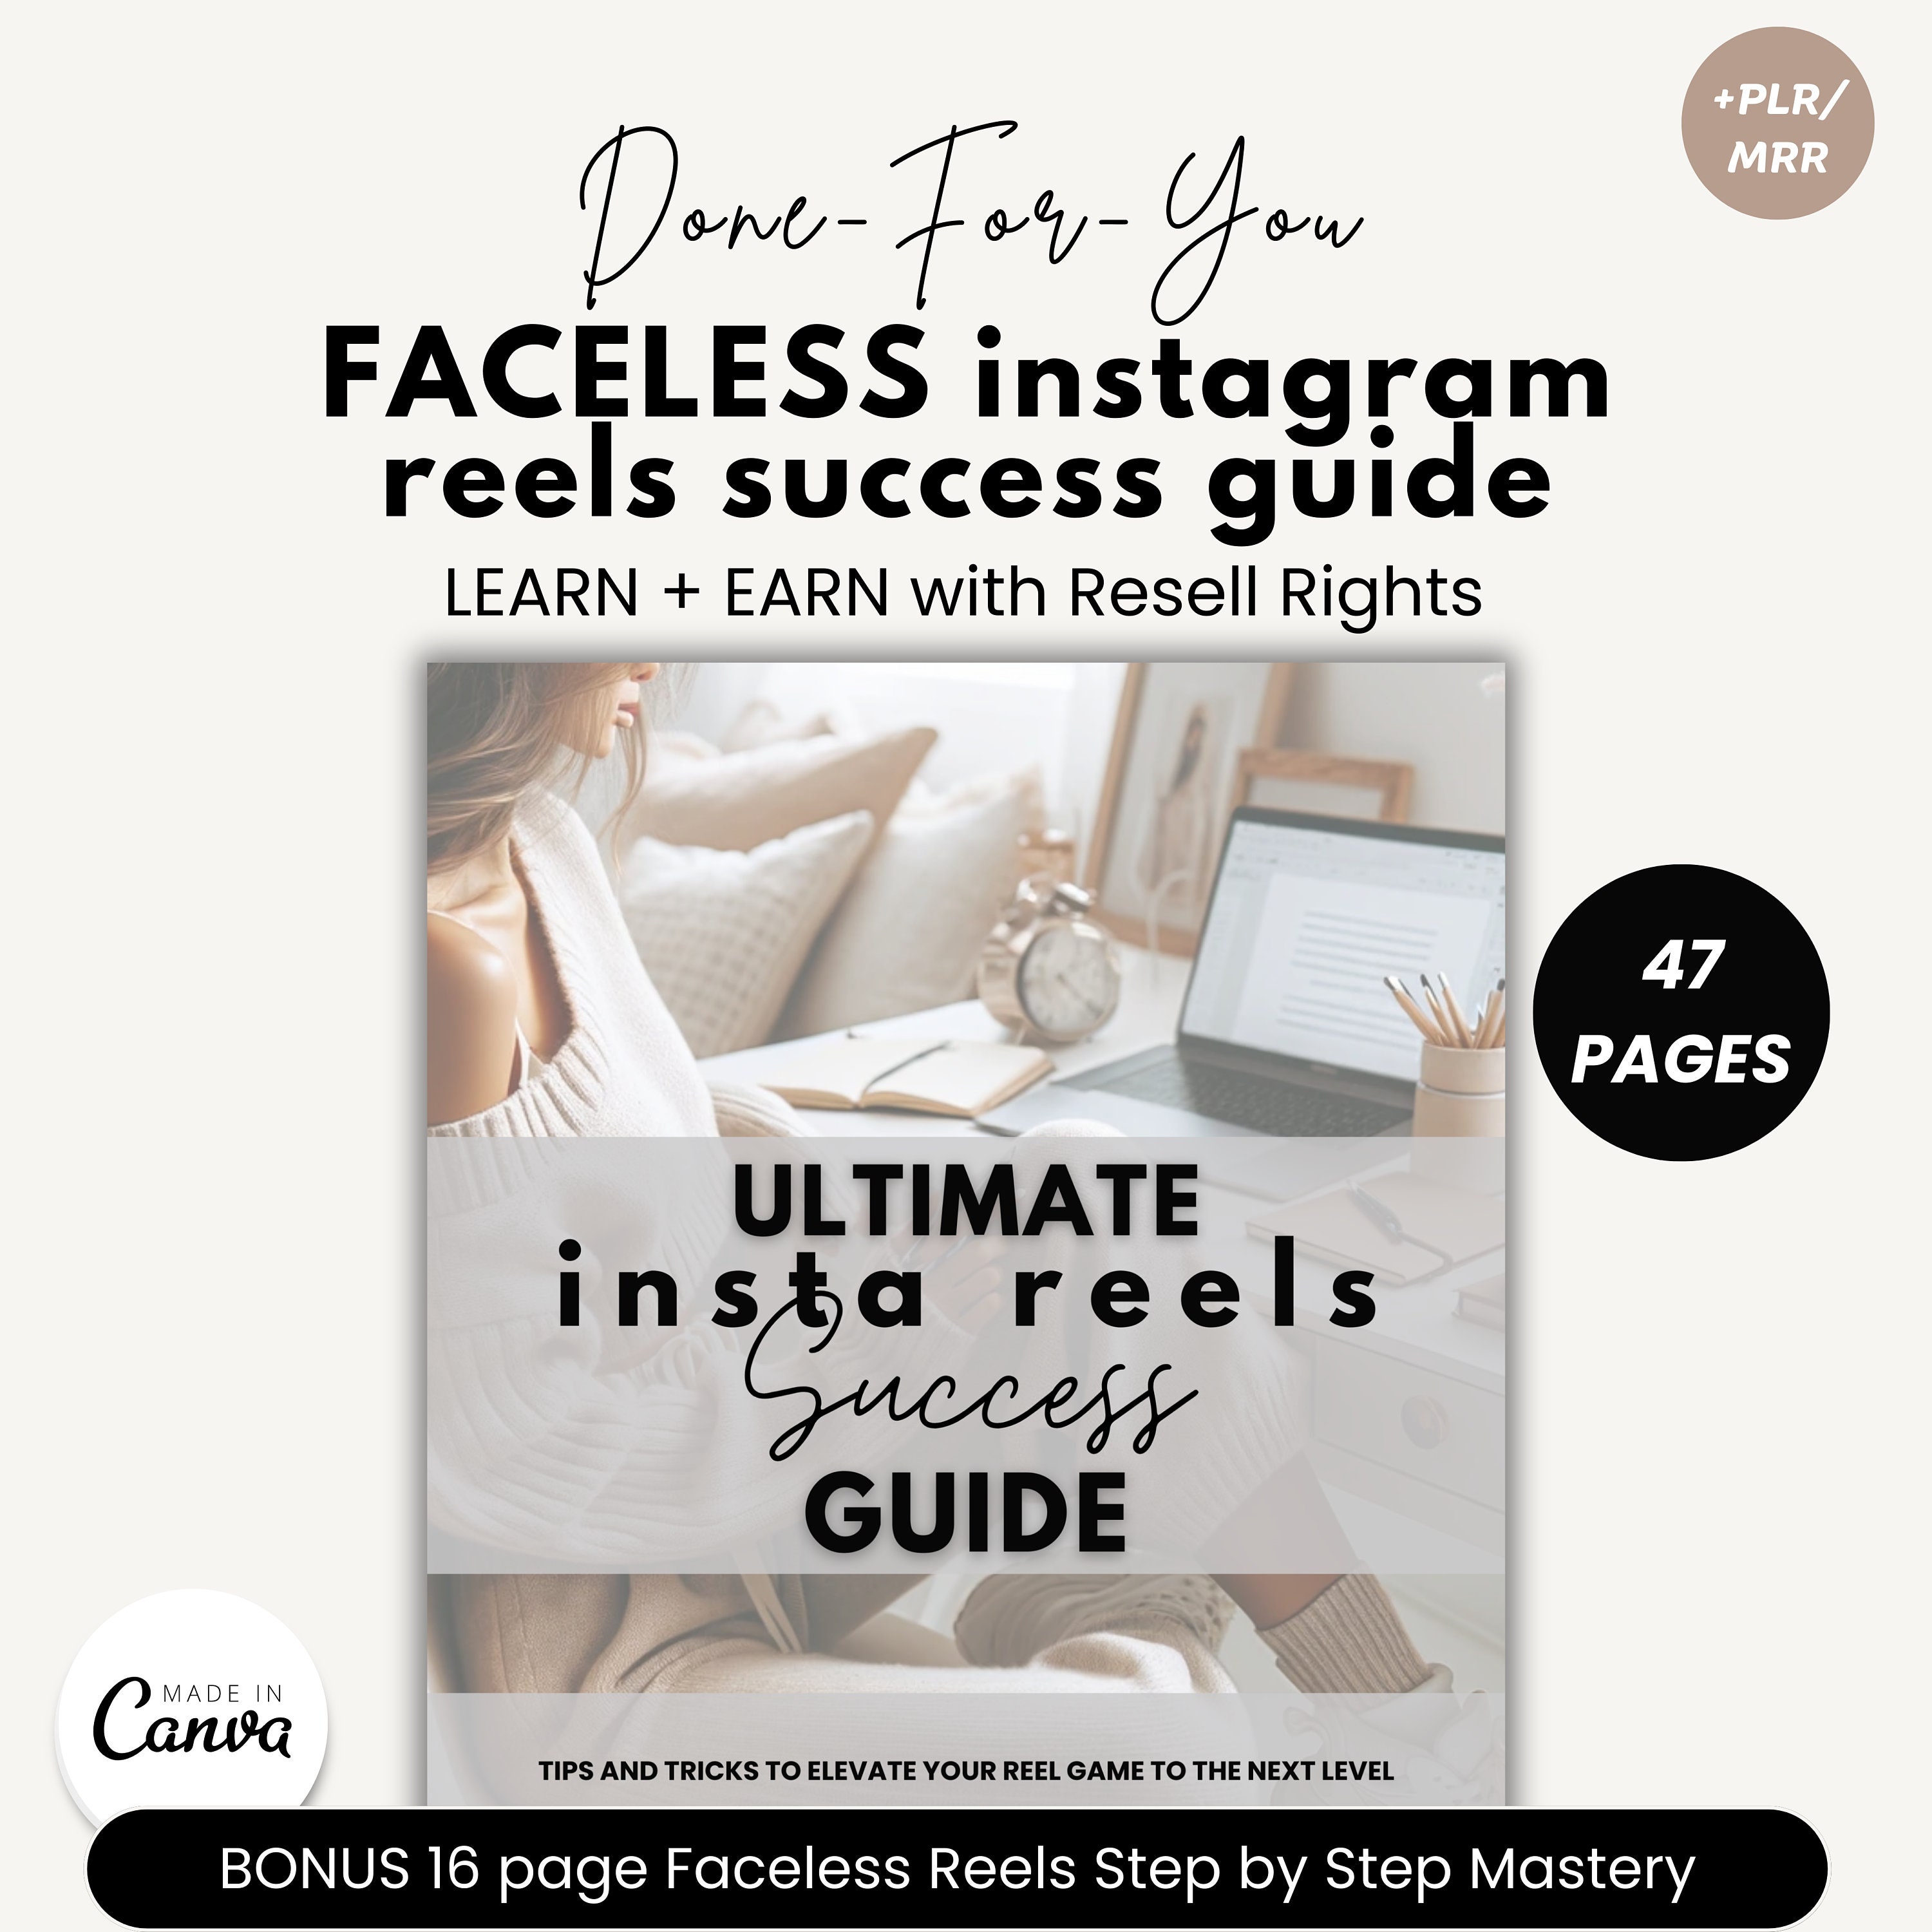 Faceless Reels, Reel Guide, Content Strategy, Faceless Digital Marketing,  Faceless Content, Plr Mrr,instagram Reels, Social Media Guide 